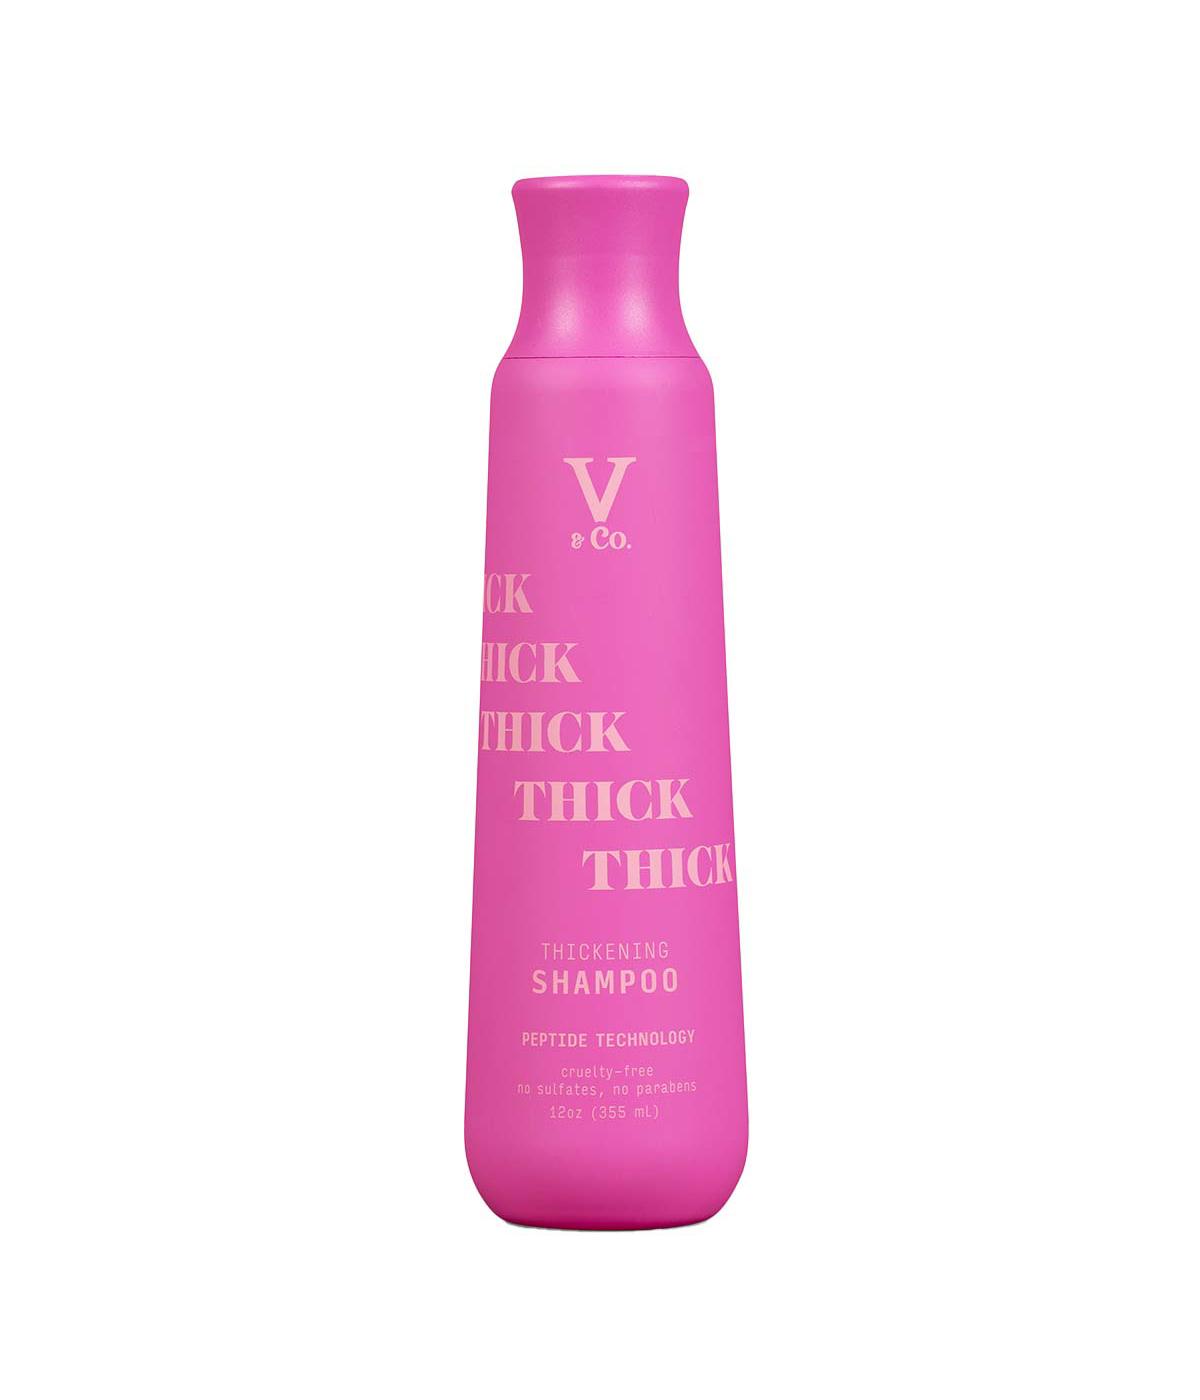 V&Co. Thickening Shampoo; image 1 of 2